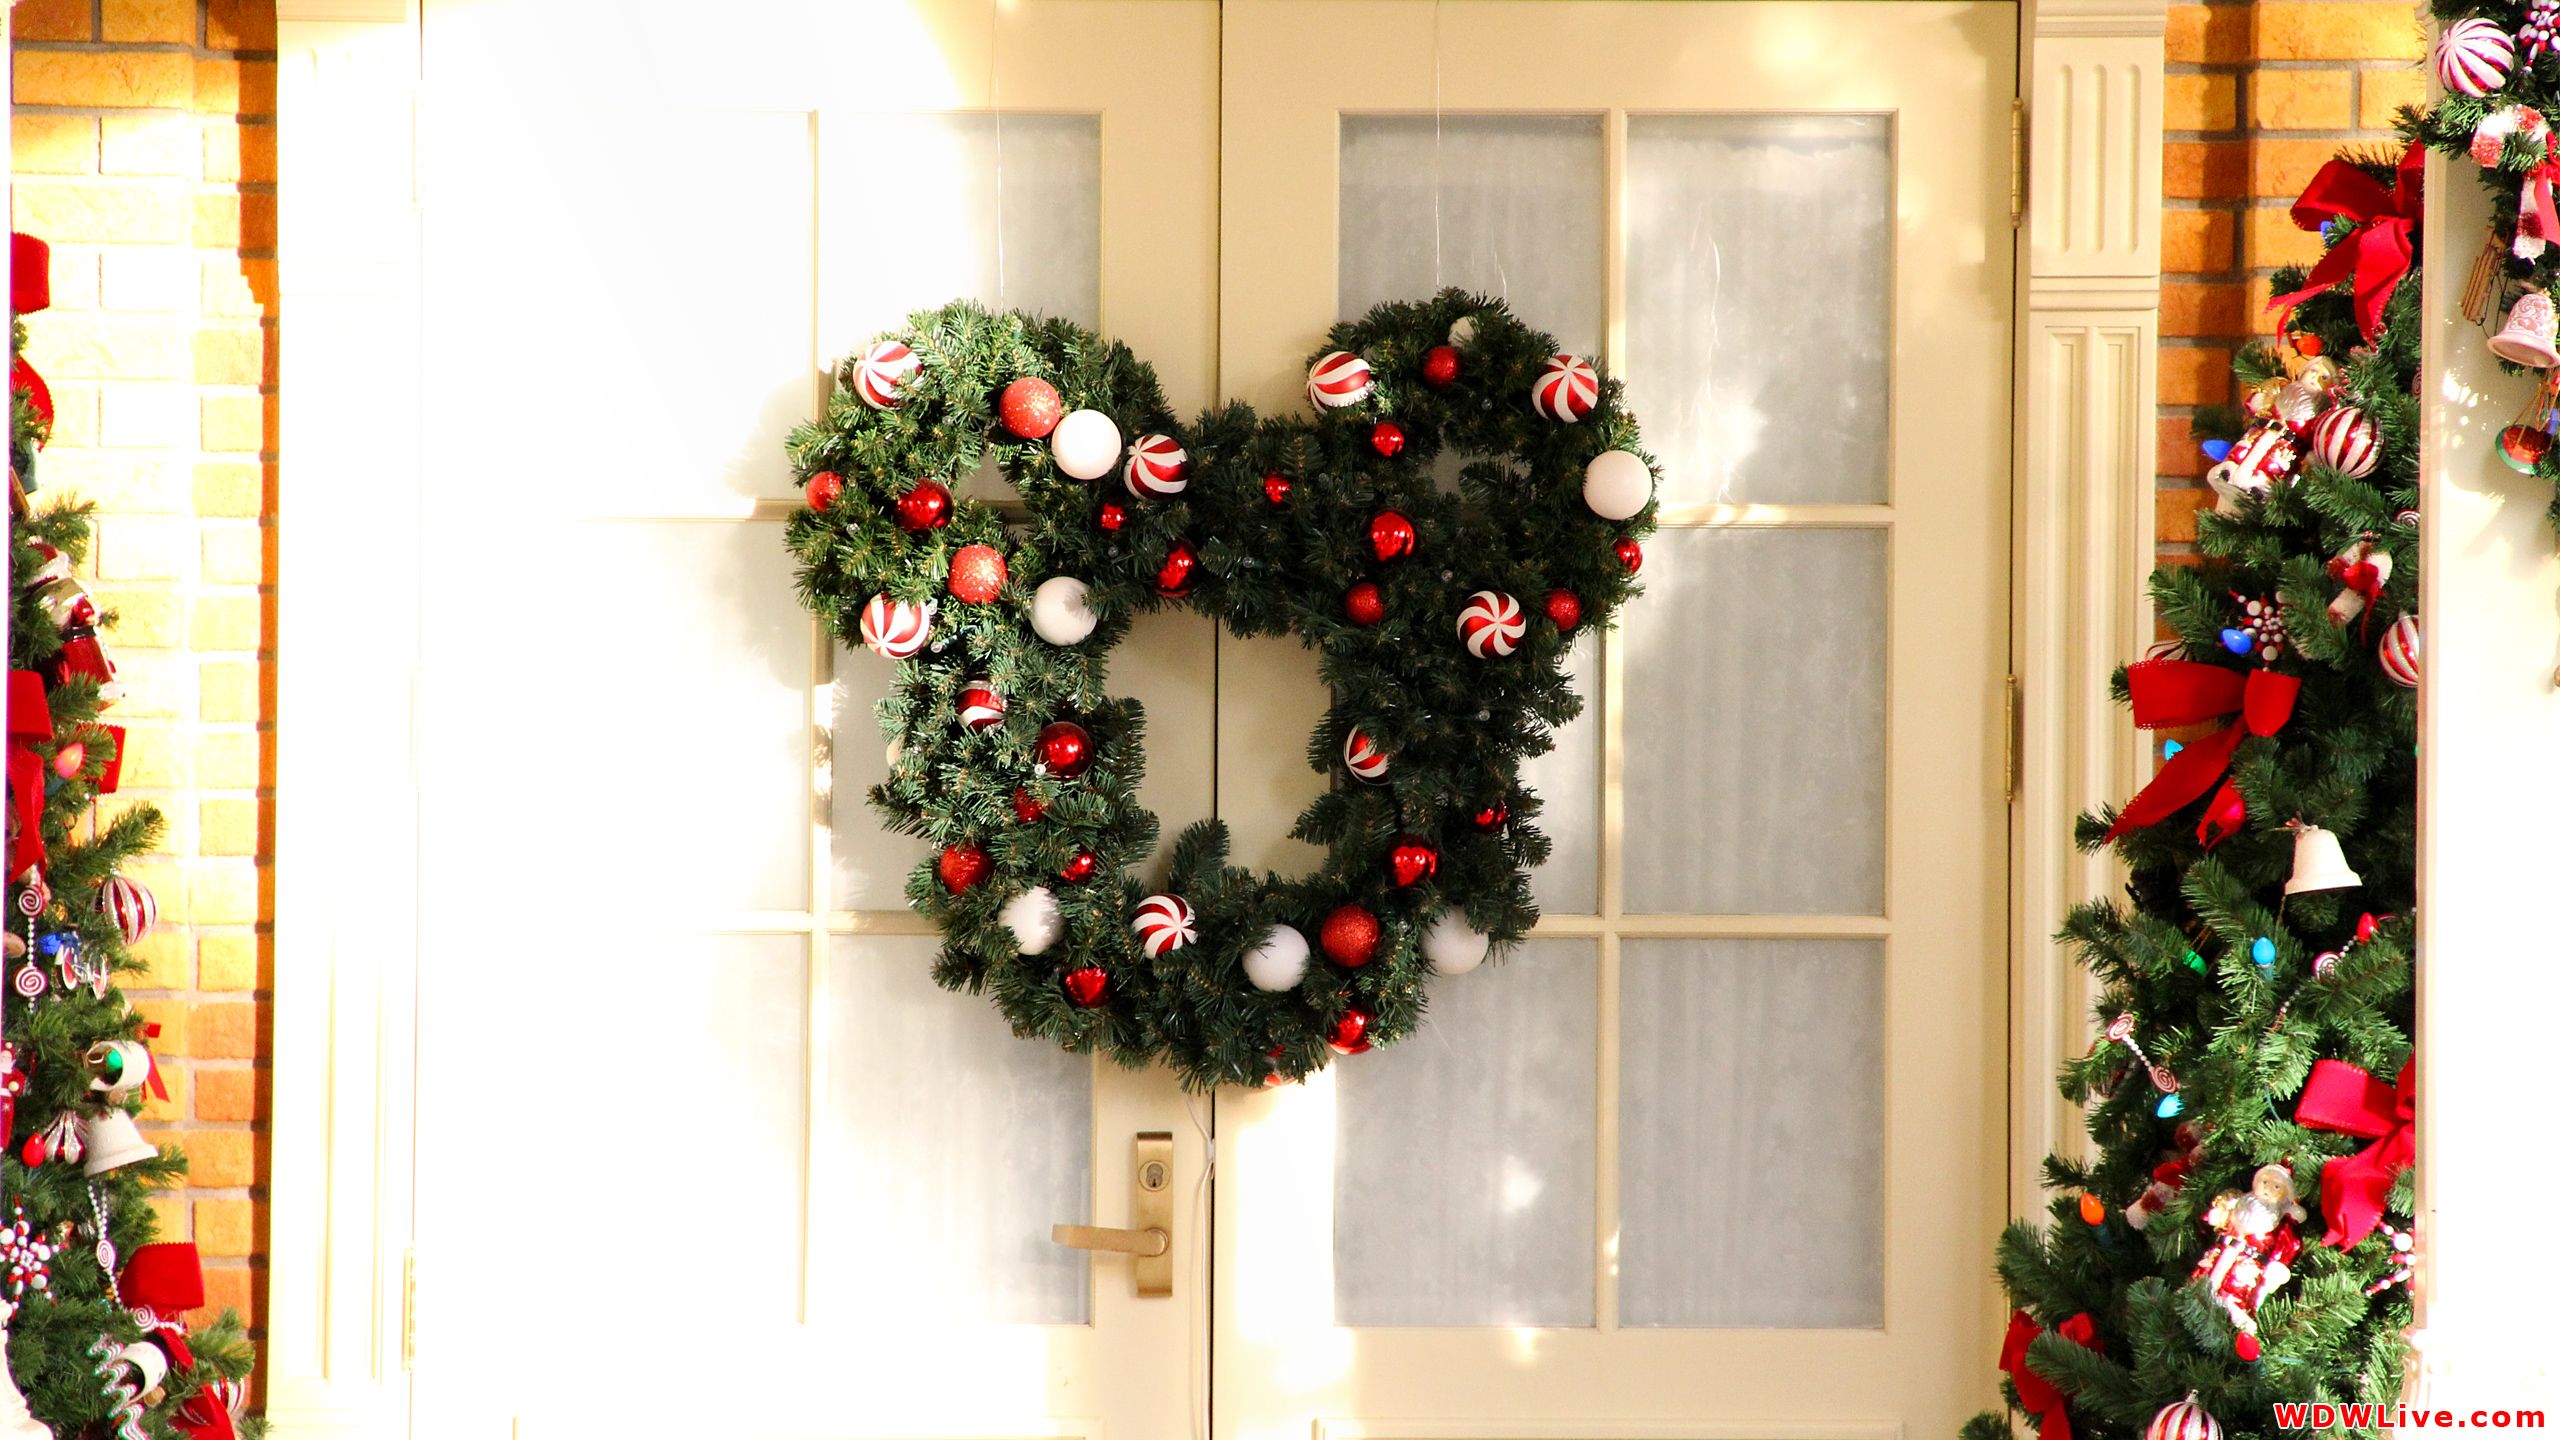 Wreath Wallpaper. Wreath Wallpaper, Christmas Wreath Wallpaper and Wreath Wallpaper Border